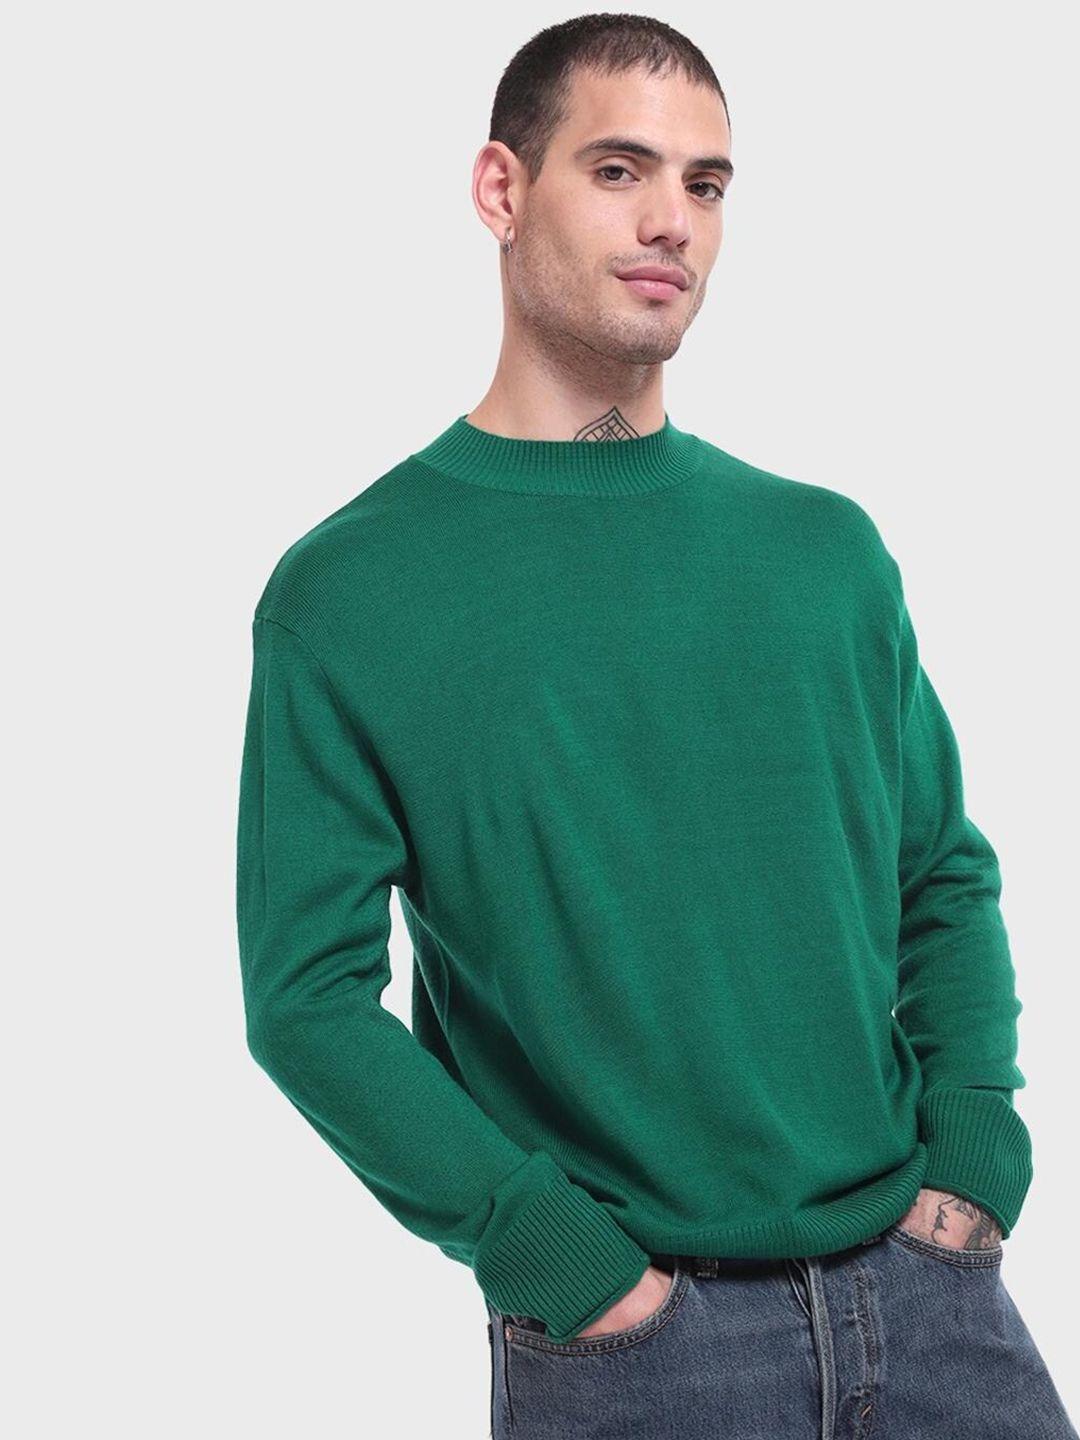 Bewakoof Men Green Acrylic Pullover Sweater